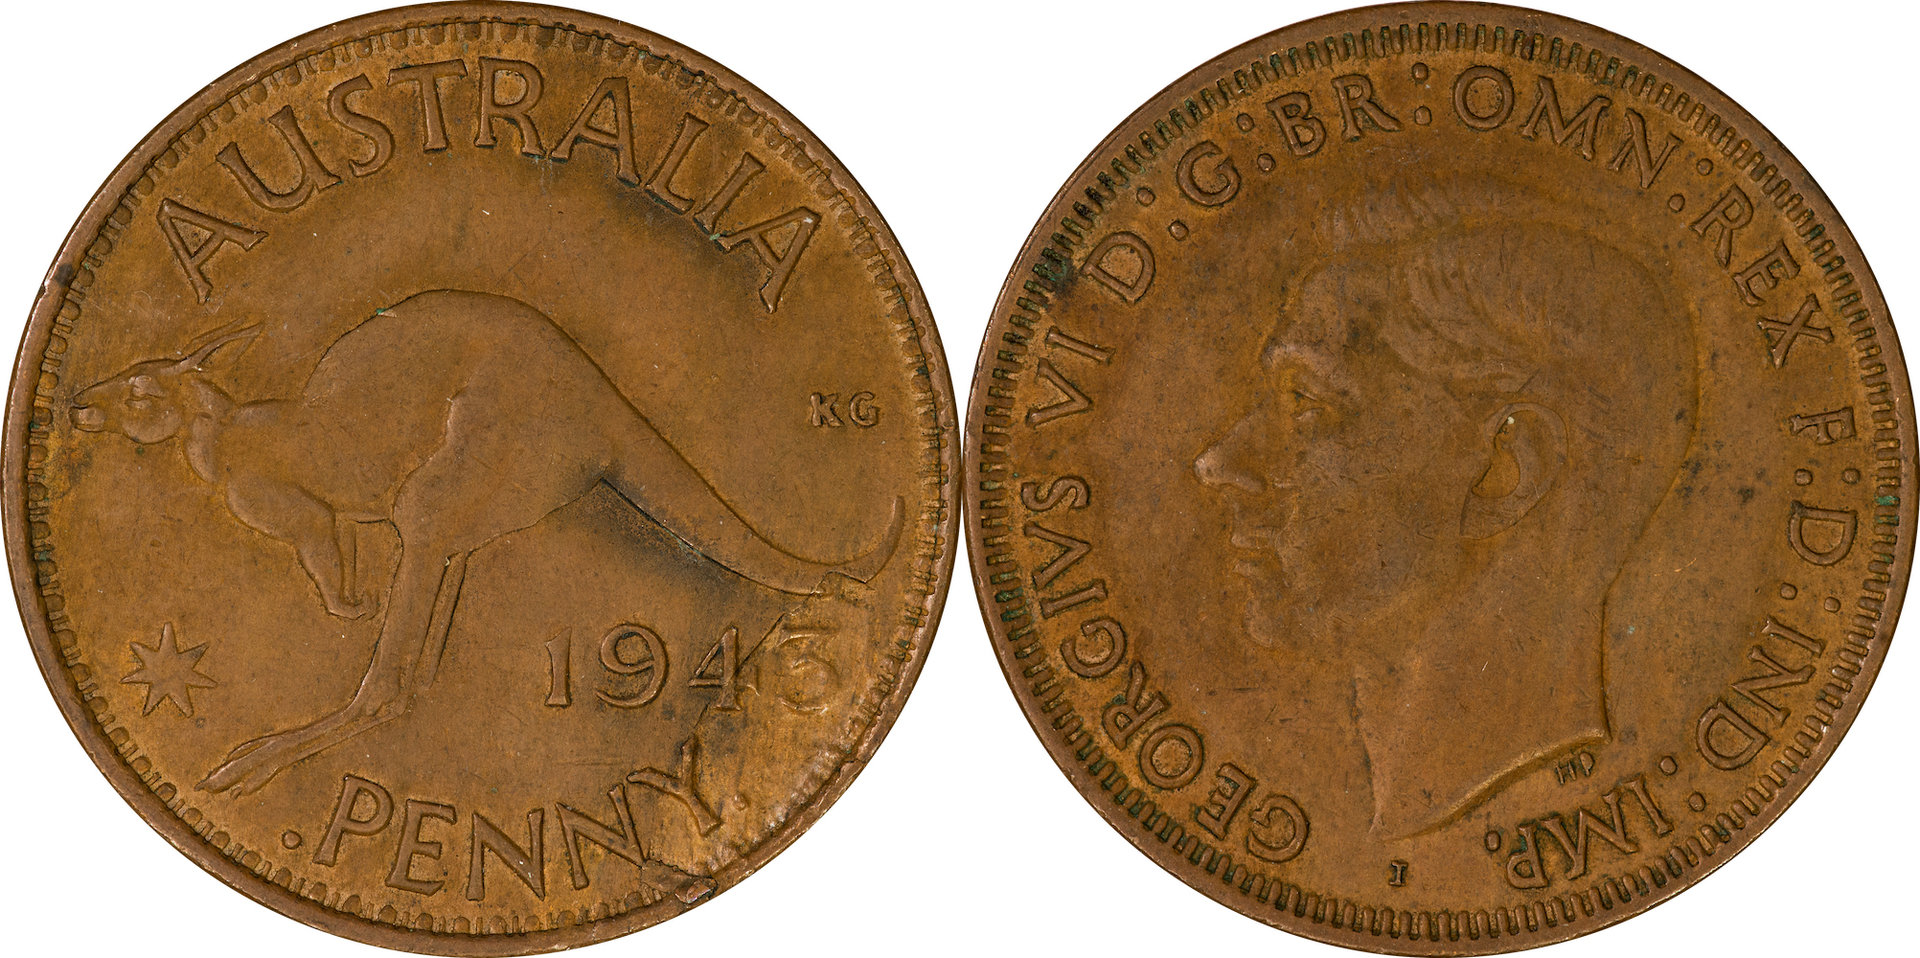 Australia - 1943 1 Penny.jpg